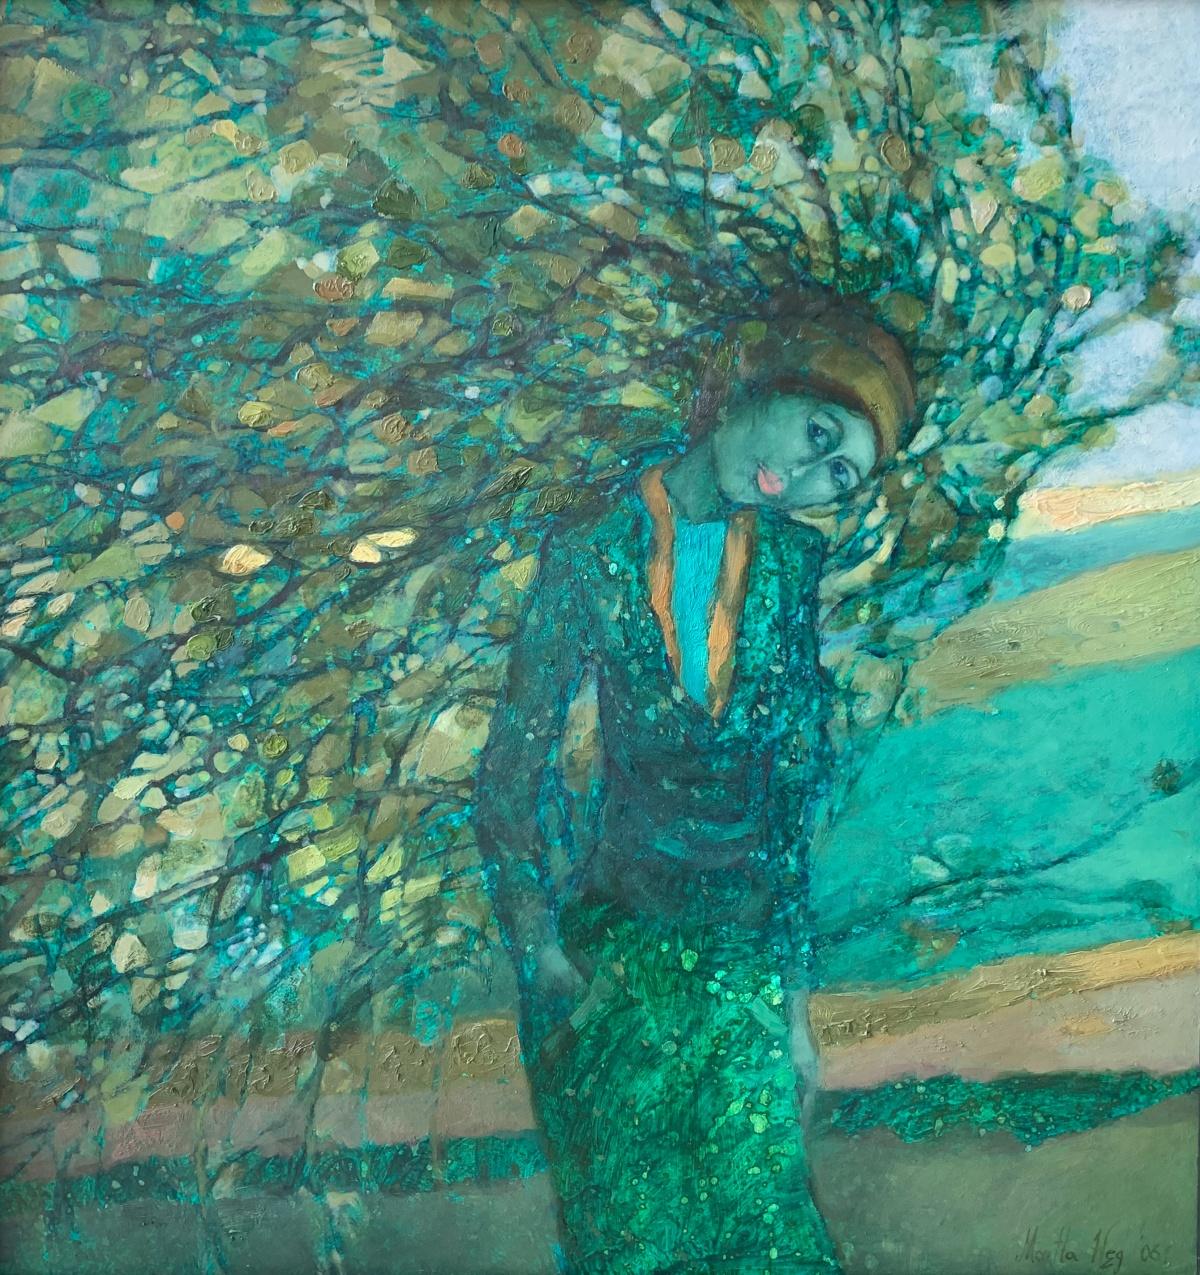 Martta Węg Figurative Painting - Forest lady - Oil figurative painting, Portrait, Monochormatic, Polish artist